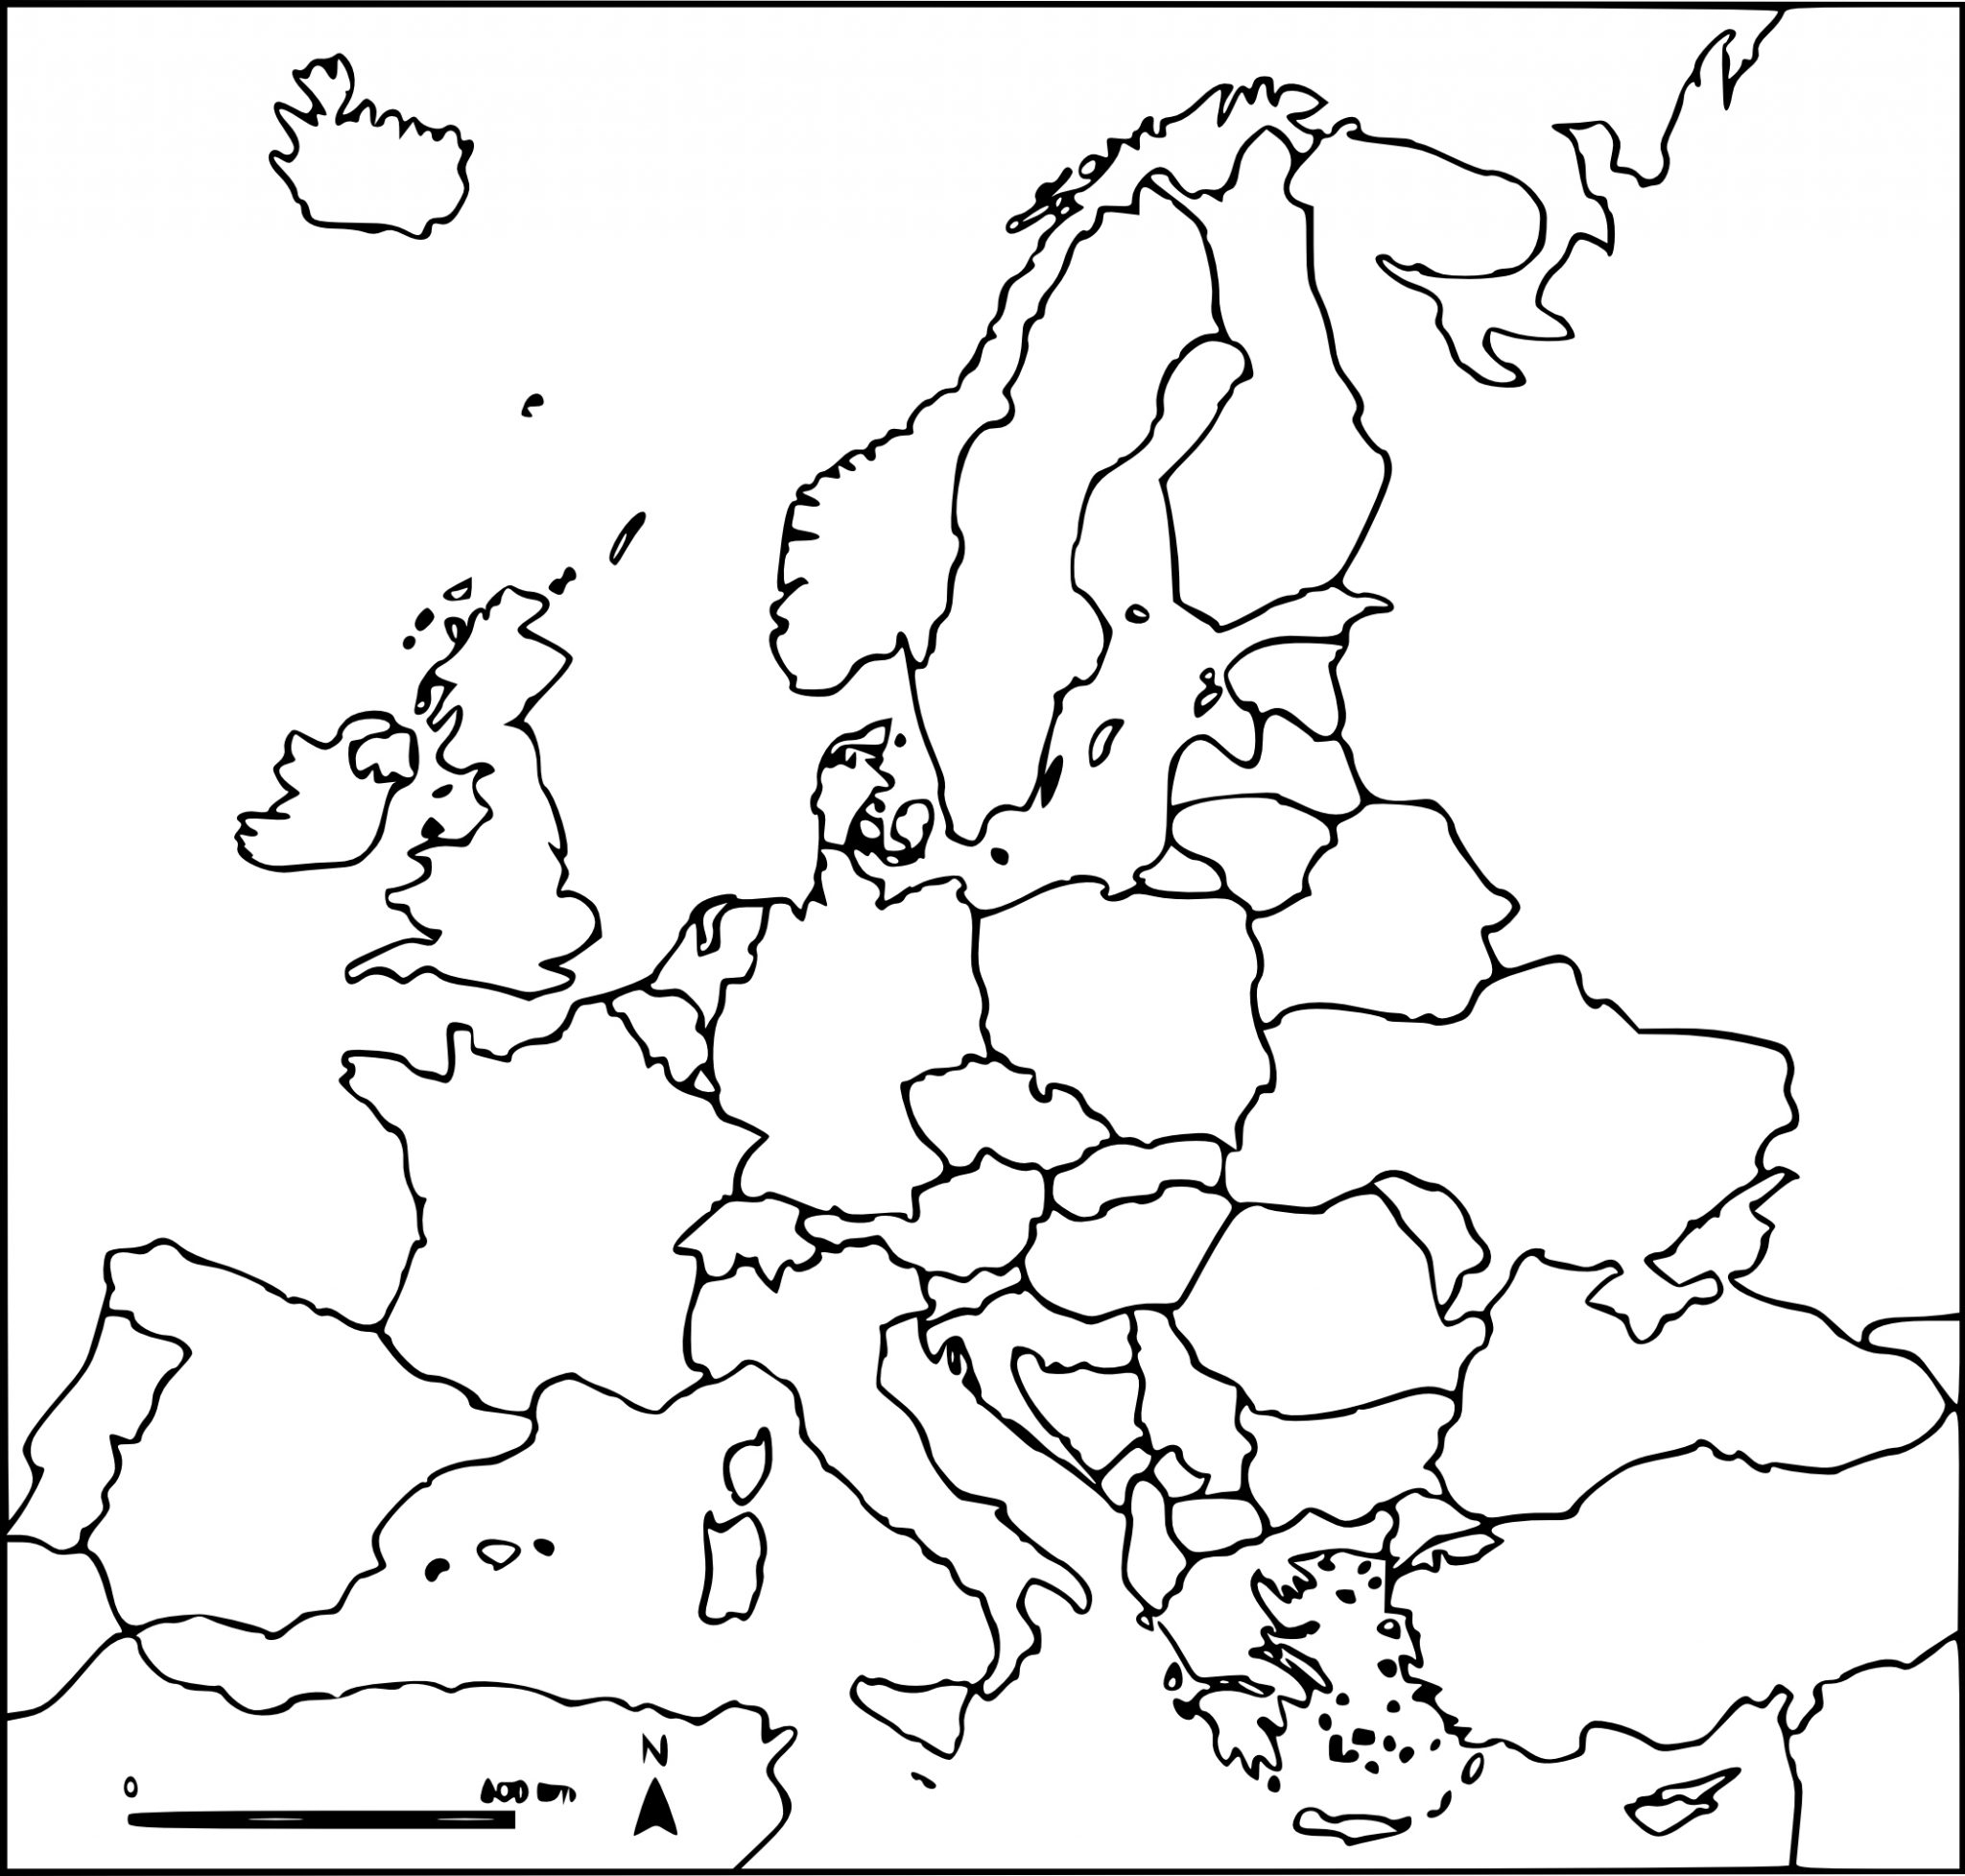 Carte Europe Vierge À Compléter En Ligne - Primanyc intérieur Carte Europe Vierge À Compléter En Ligne